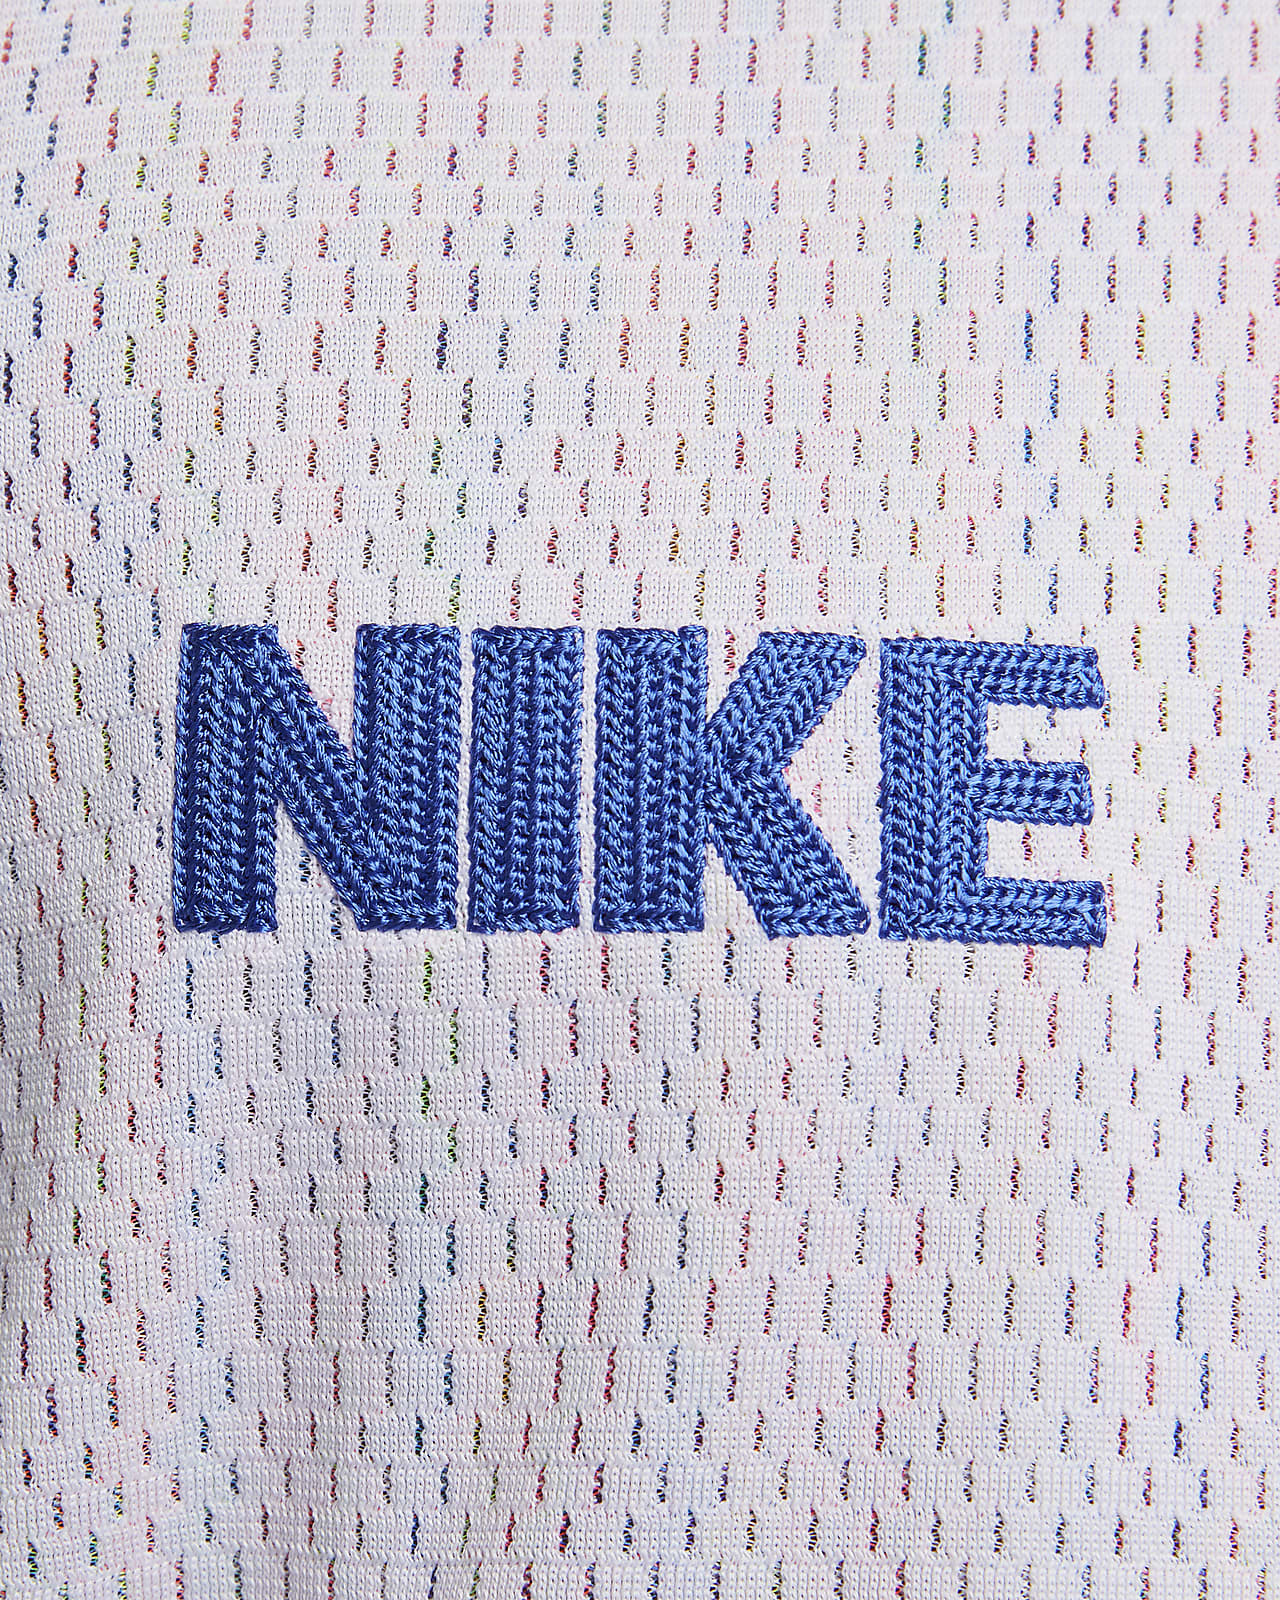 Nike Giannis Men's Dri-Fit Printed DNA Basketball Jersey